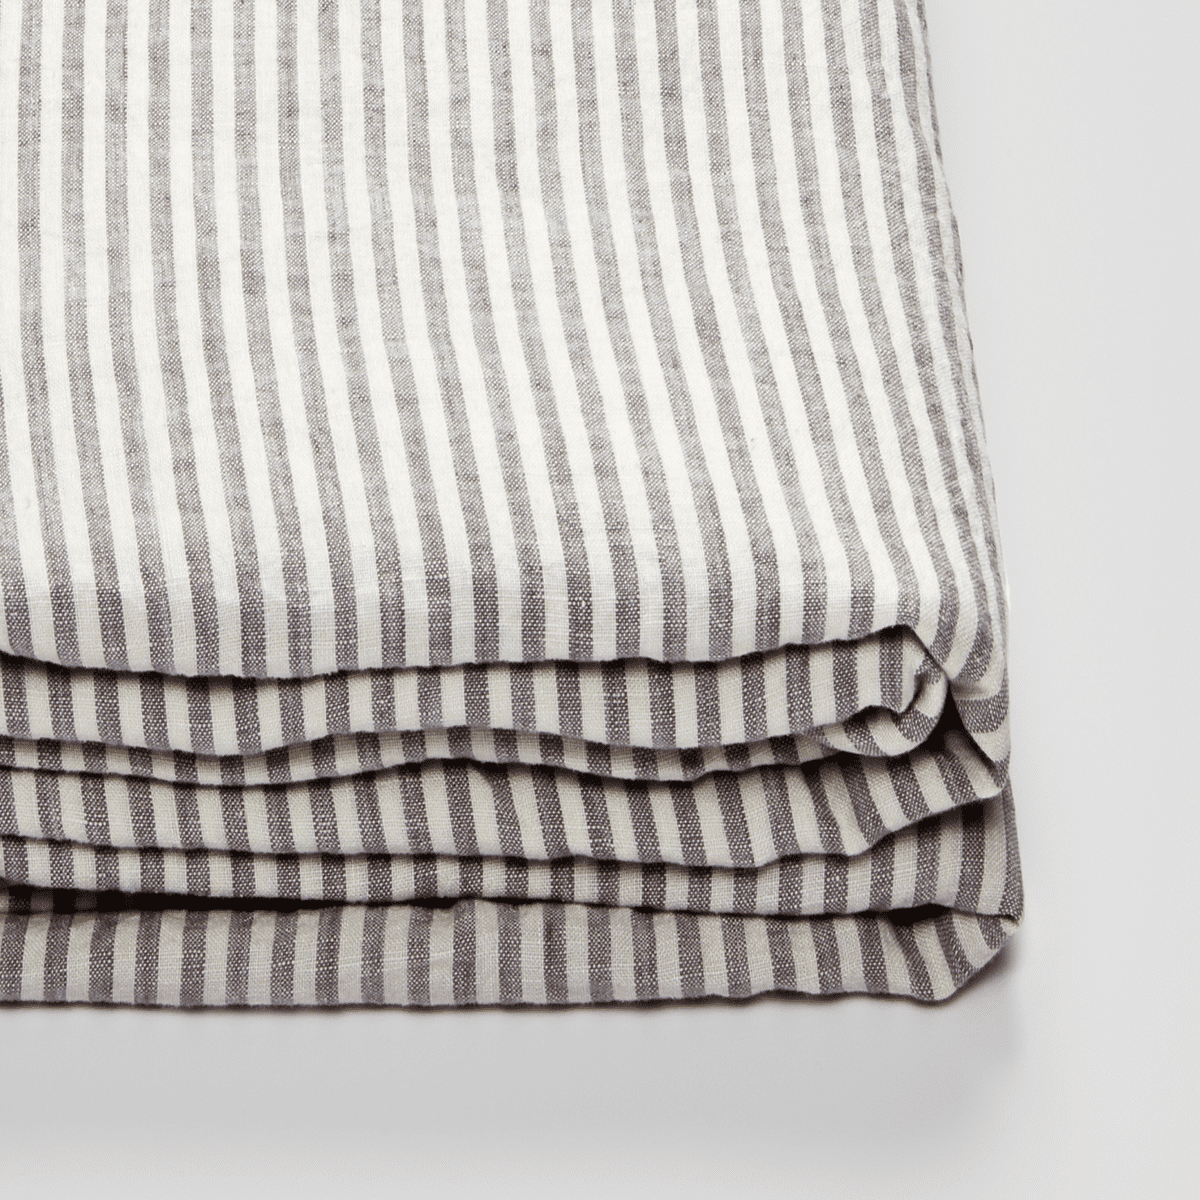 Fitted Sheet in Grey and White Stripe 100 Linen Halvorsen Interiors